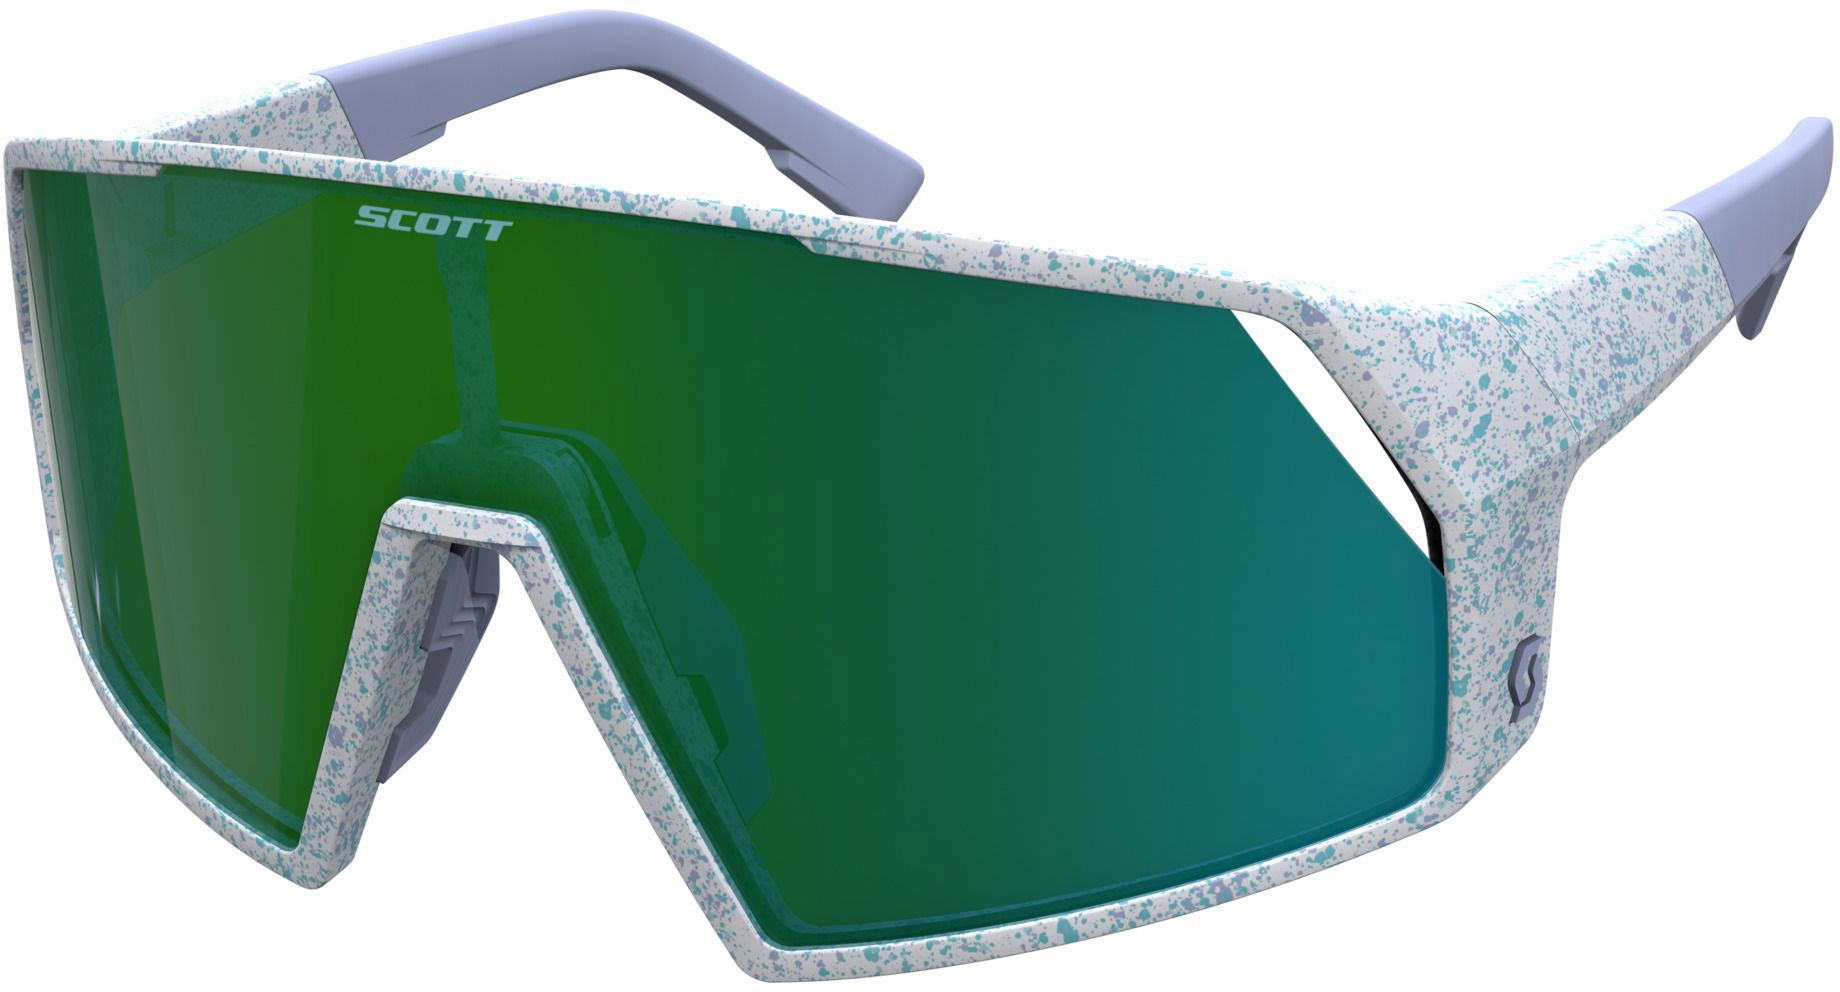 Se Scott Pro Shield Cykelbrille - Terrazzo White / Green Chrome hos Cykelexperten.dk